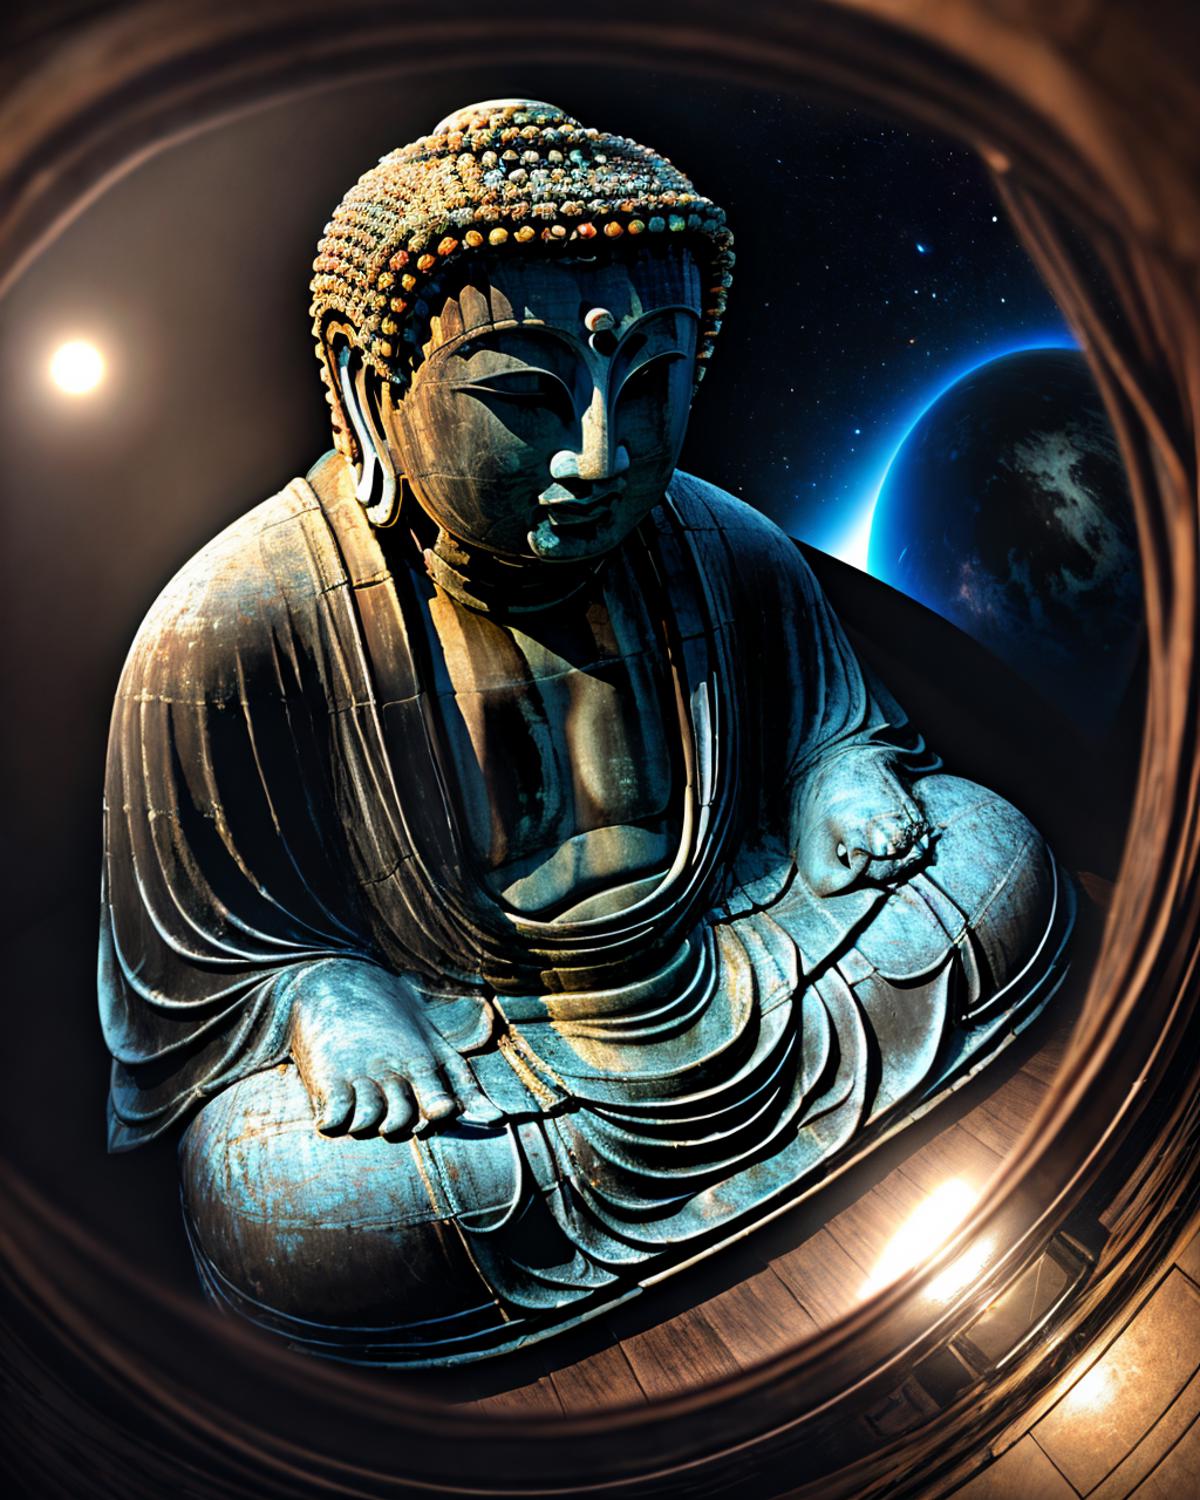 鎌倉大仏 / Kamakura Great Buddha image by Darknoice